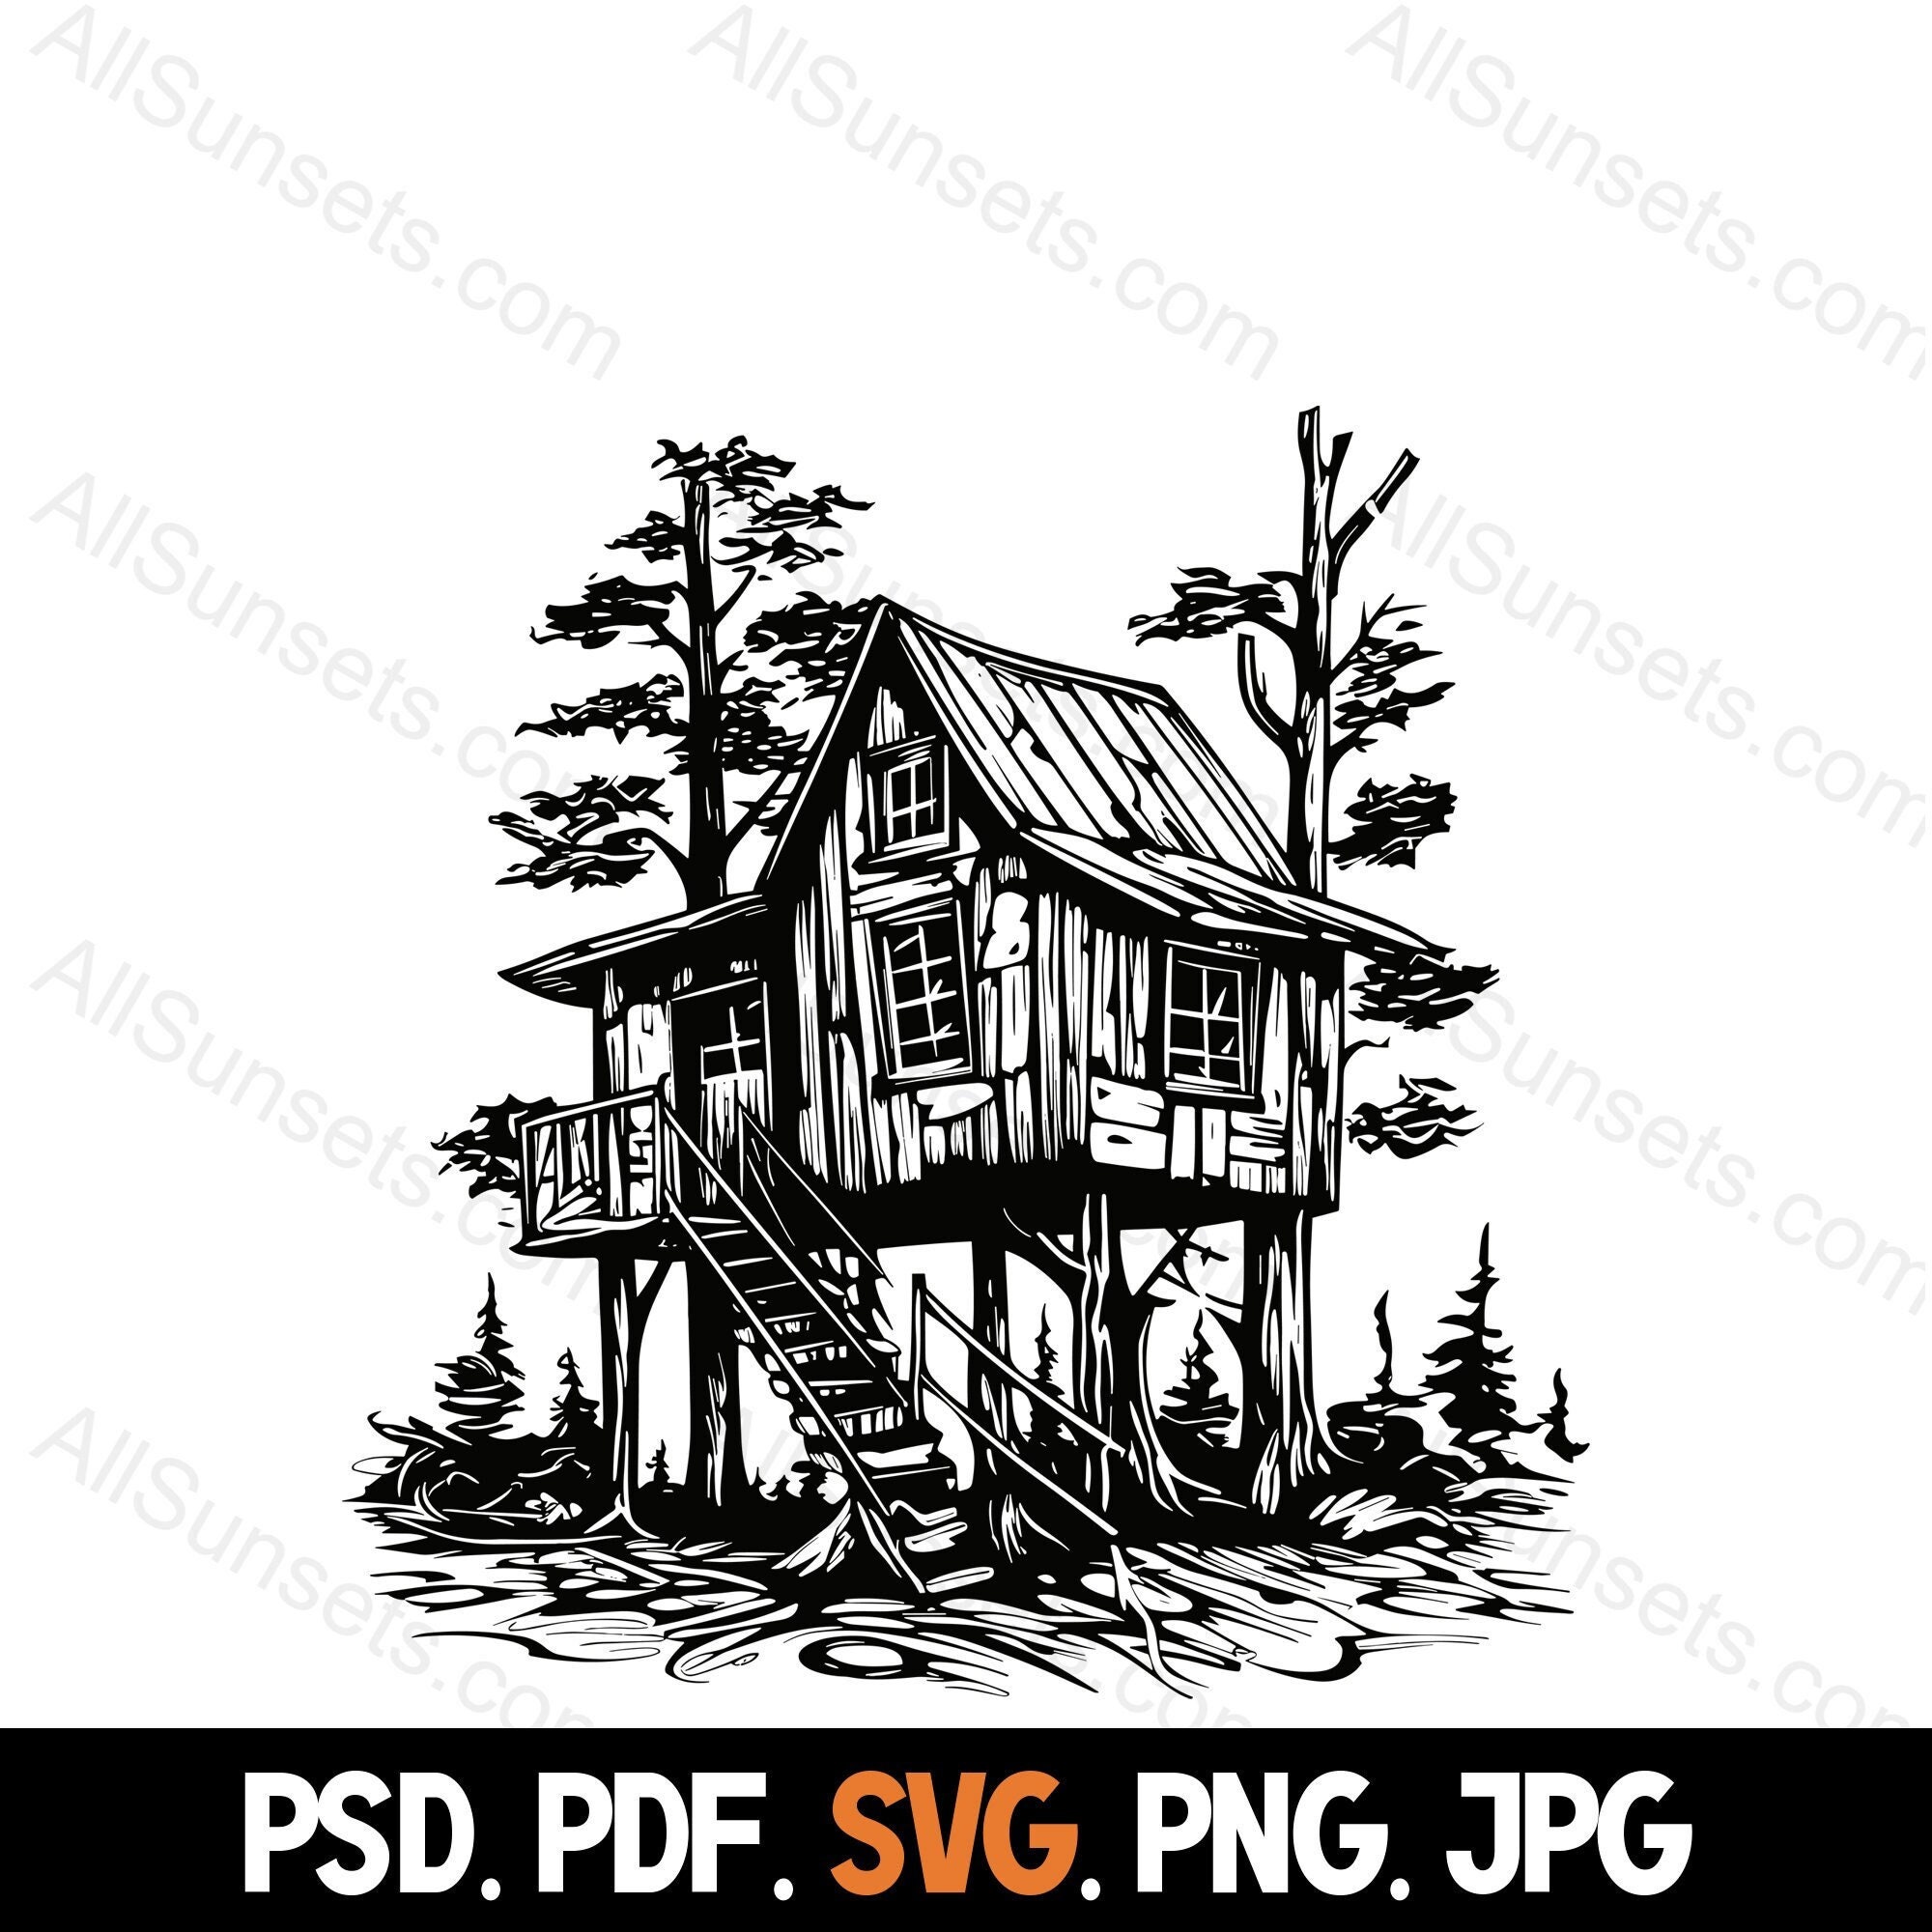 Tvokids Logo PNG vector in SVG, PDF, AI, CDR format